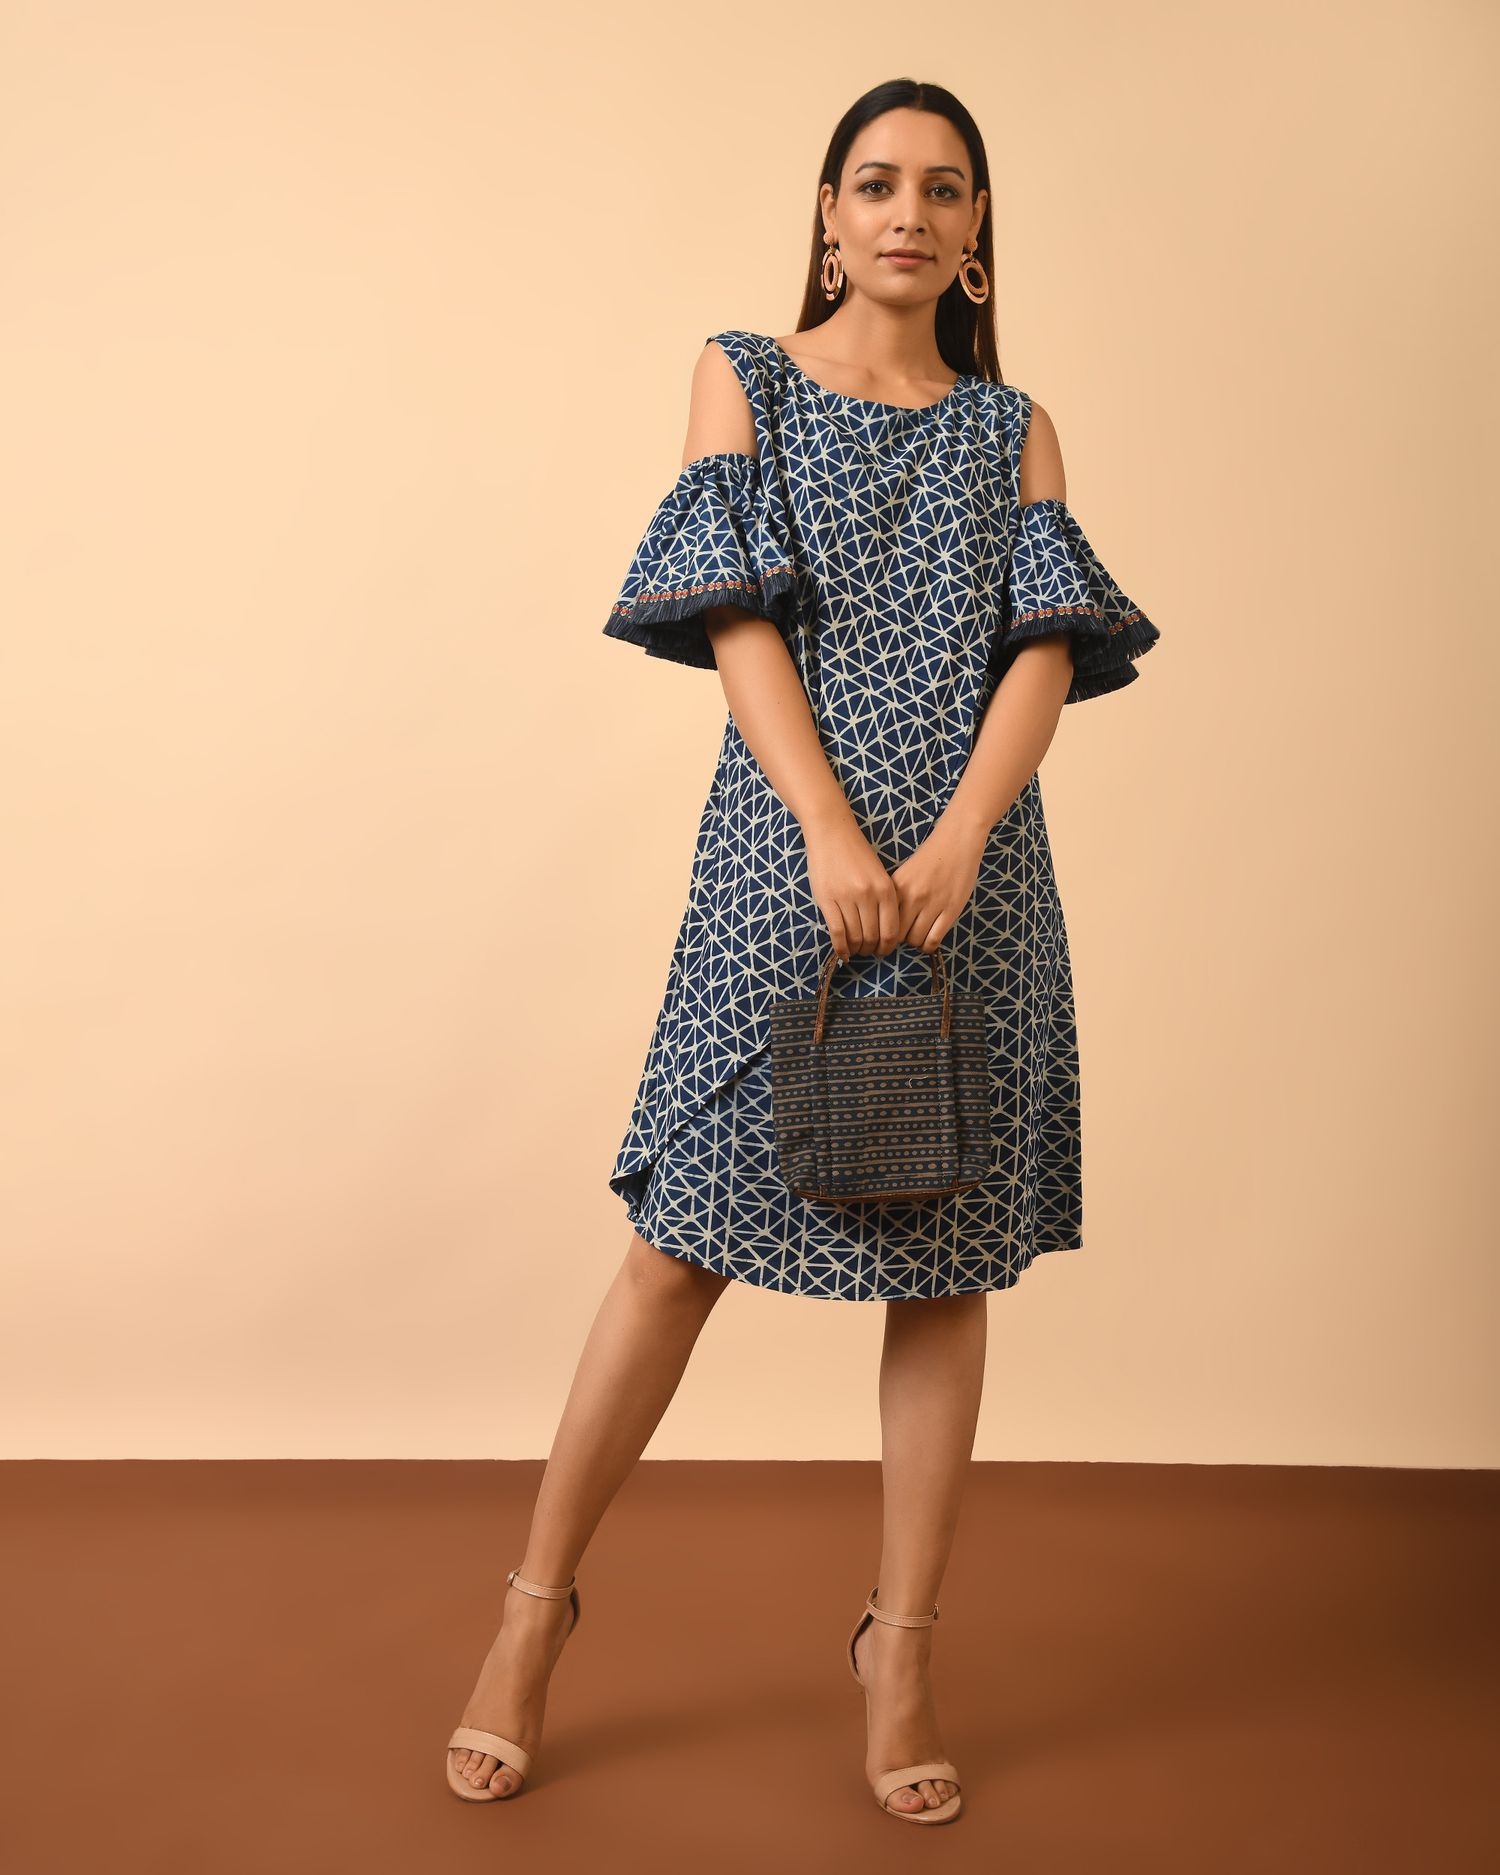 Model wearing Beautiful Indigo Dyed Dabu Print cold shoulder Dress holding bag